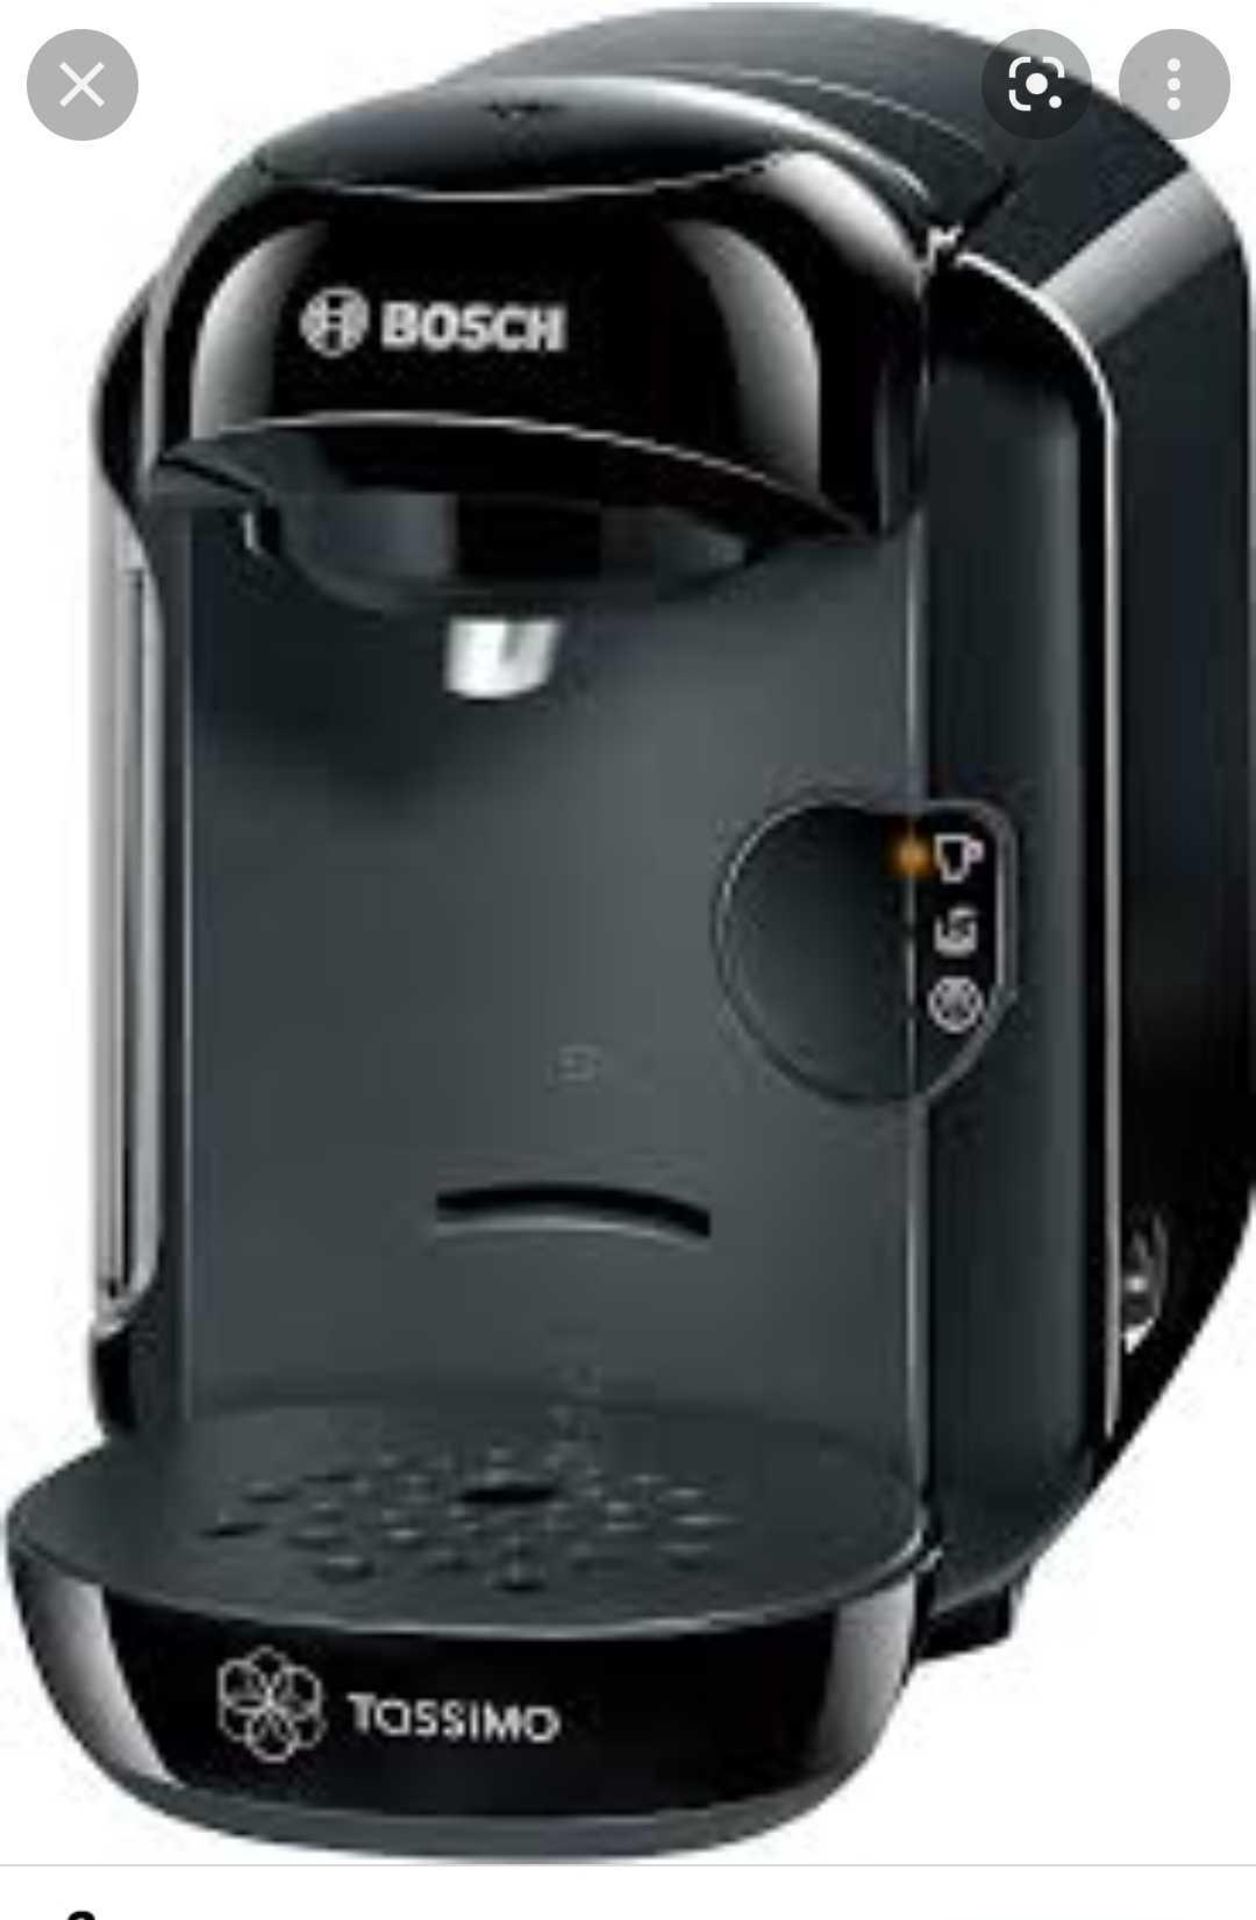 RRP £130 Boxed Bosch Black Coffee Machine